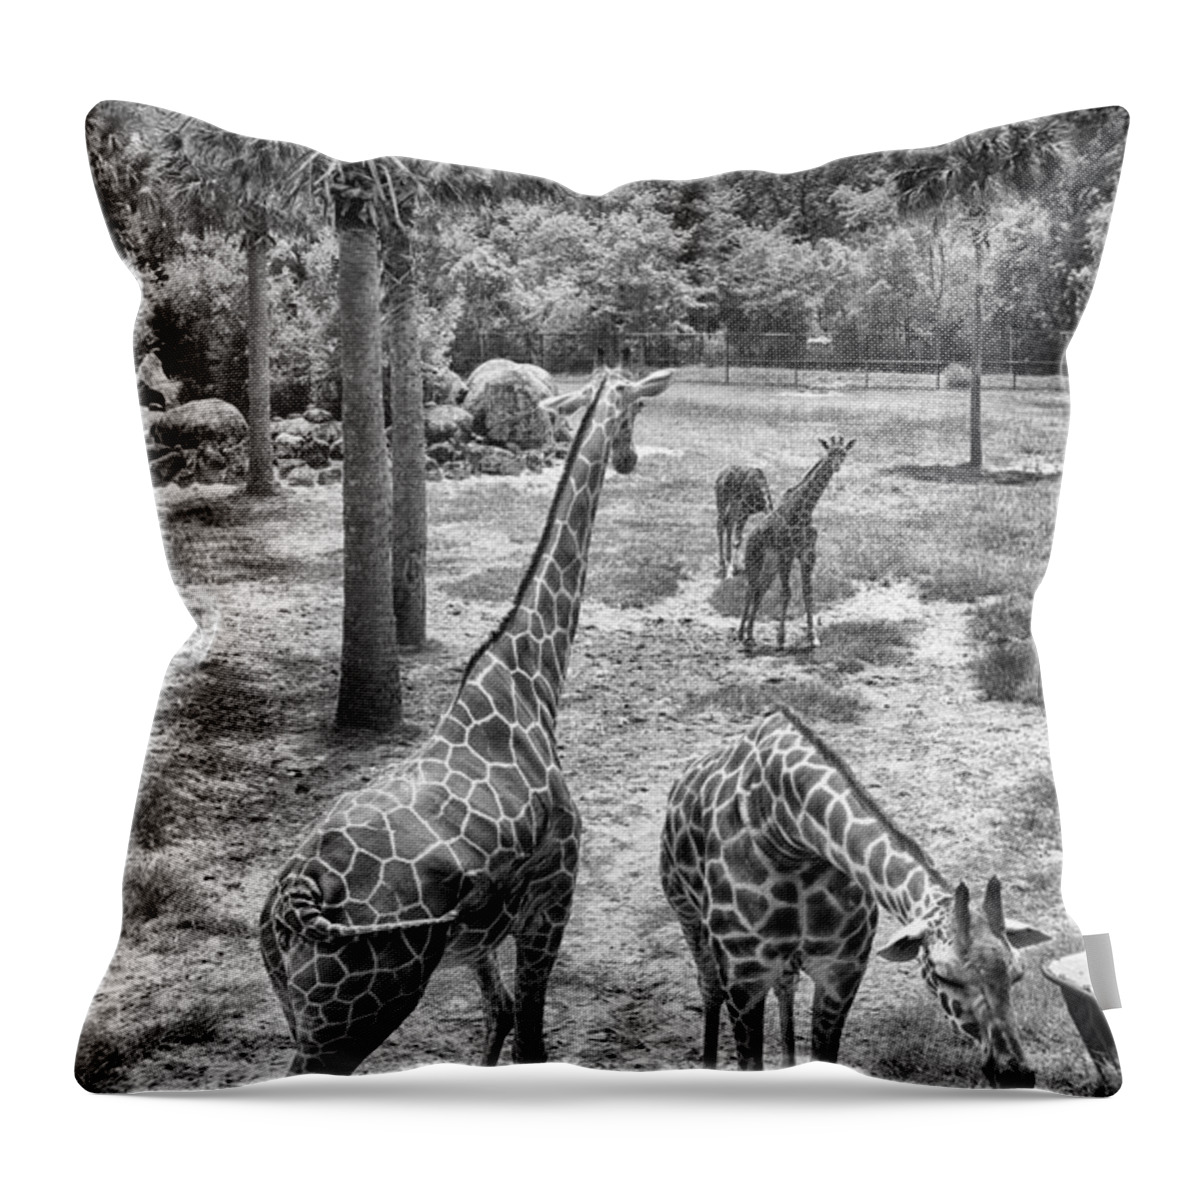 Giraffe Throw Pillow featuring the photograph Giraffe Reticulated by Howard Salmon